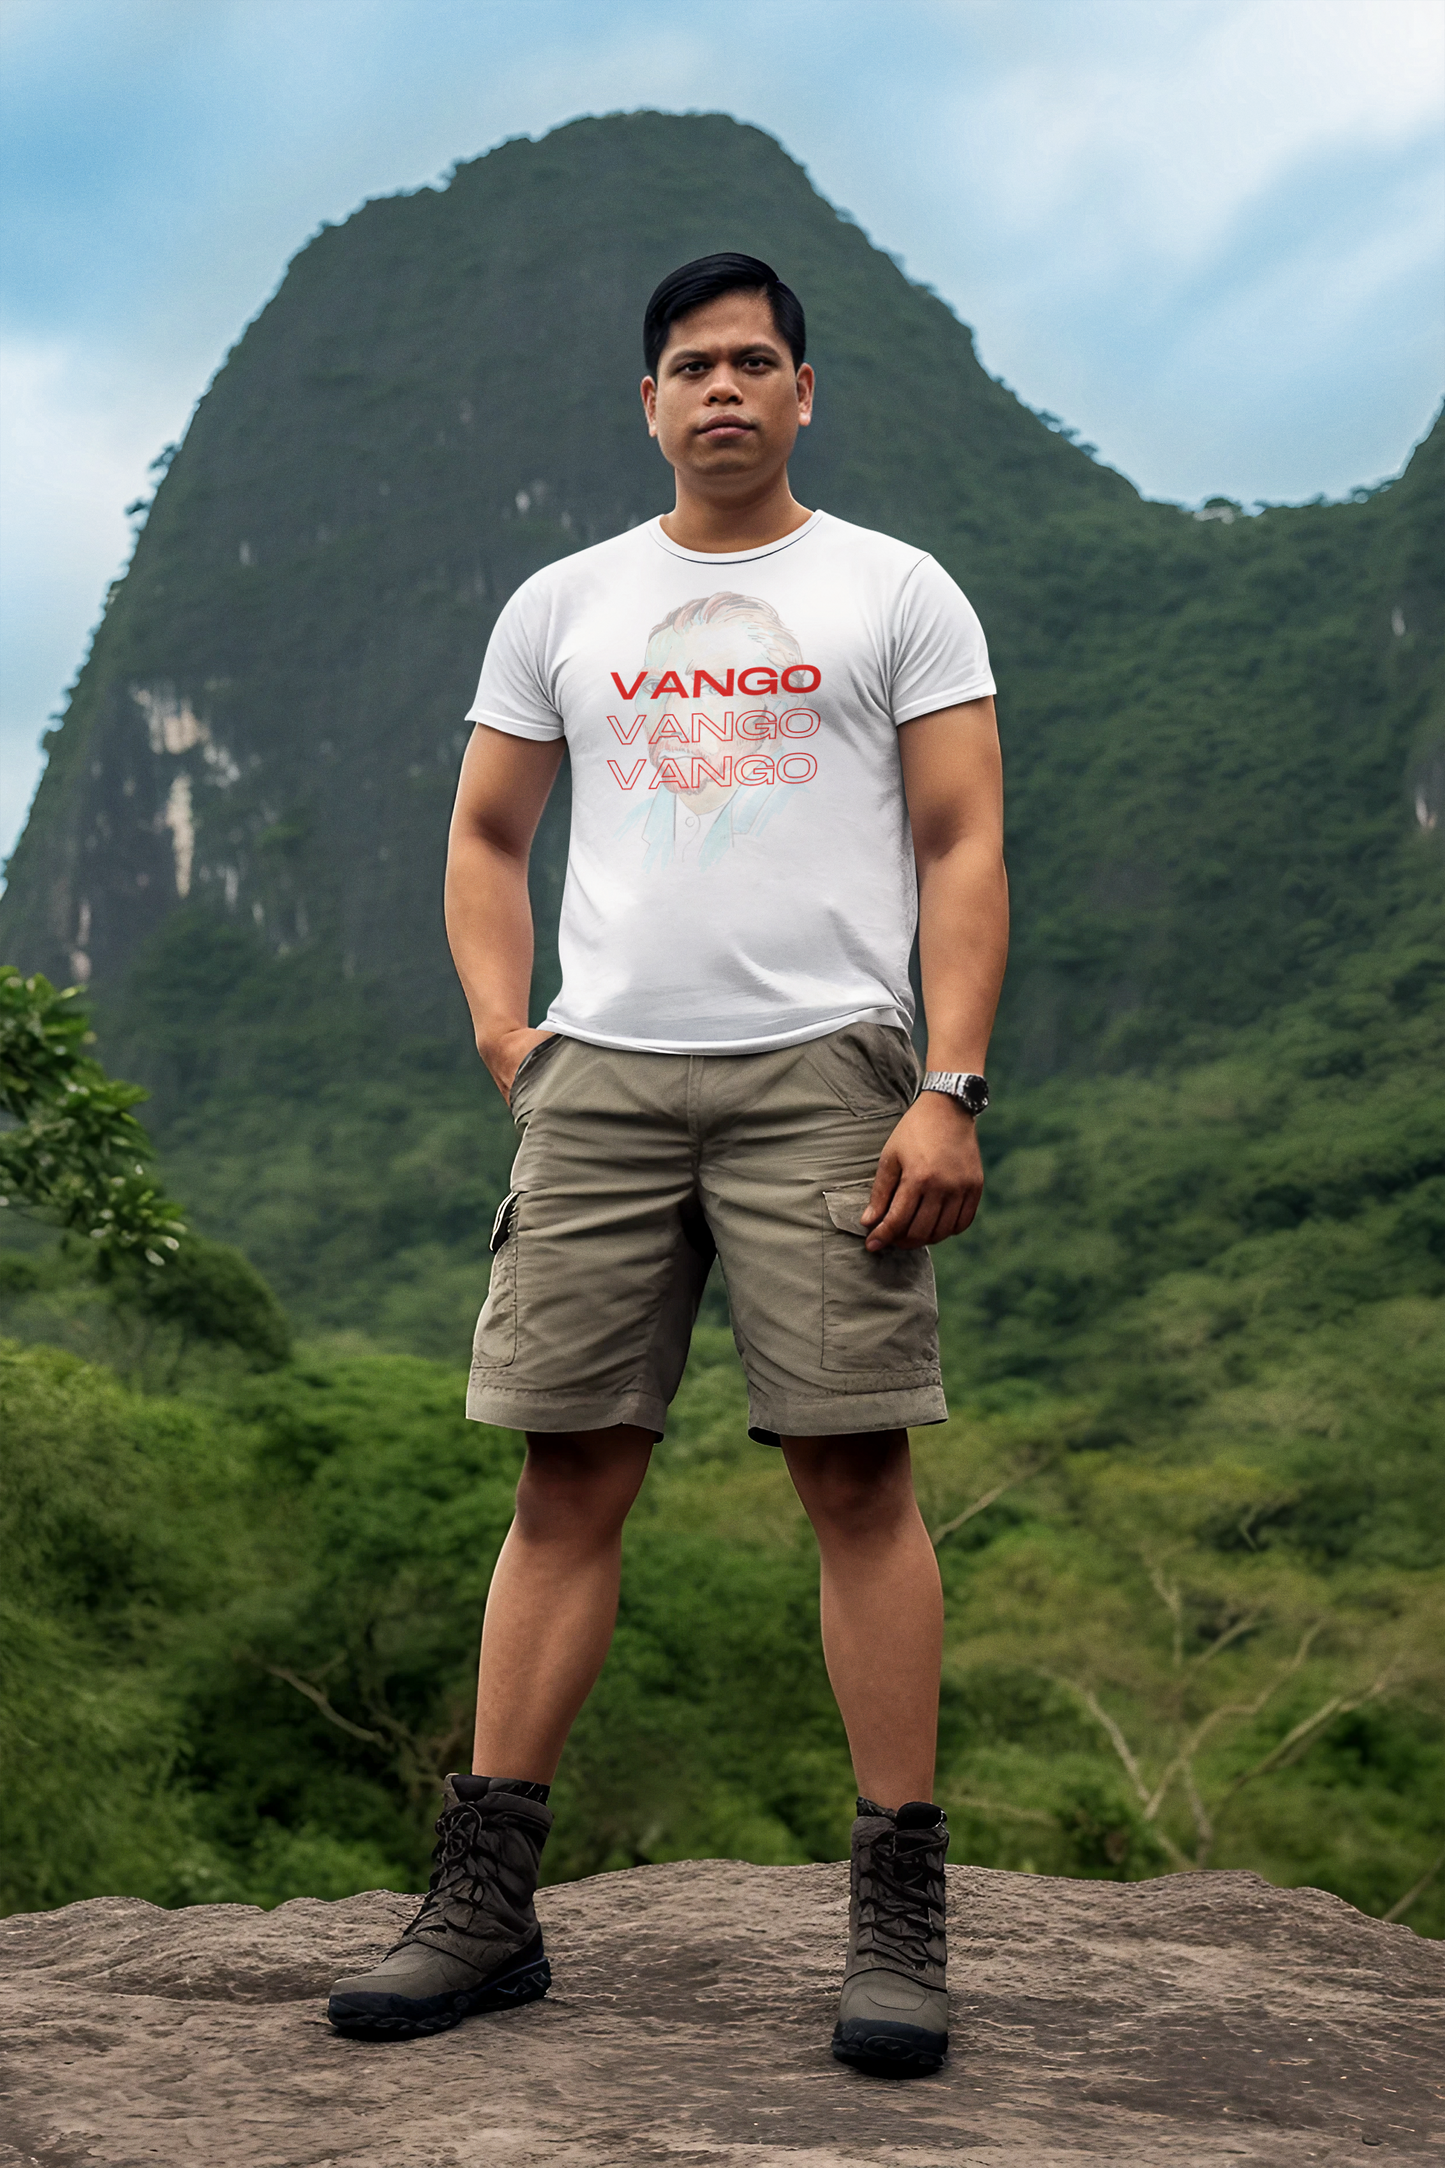 Bilkool Vango Cotton Half Sleeve T-Shirt